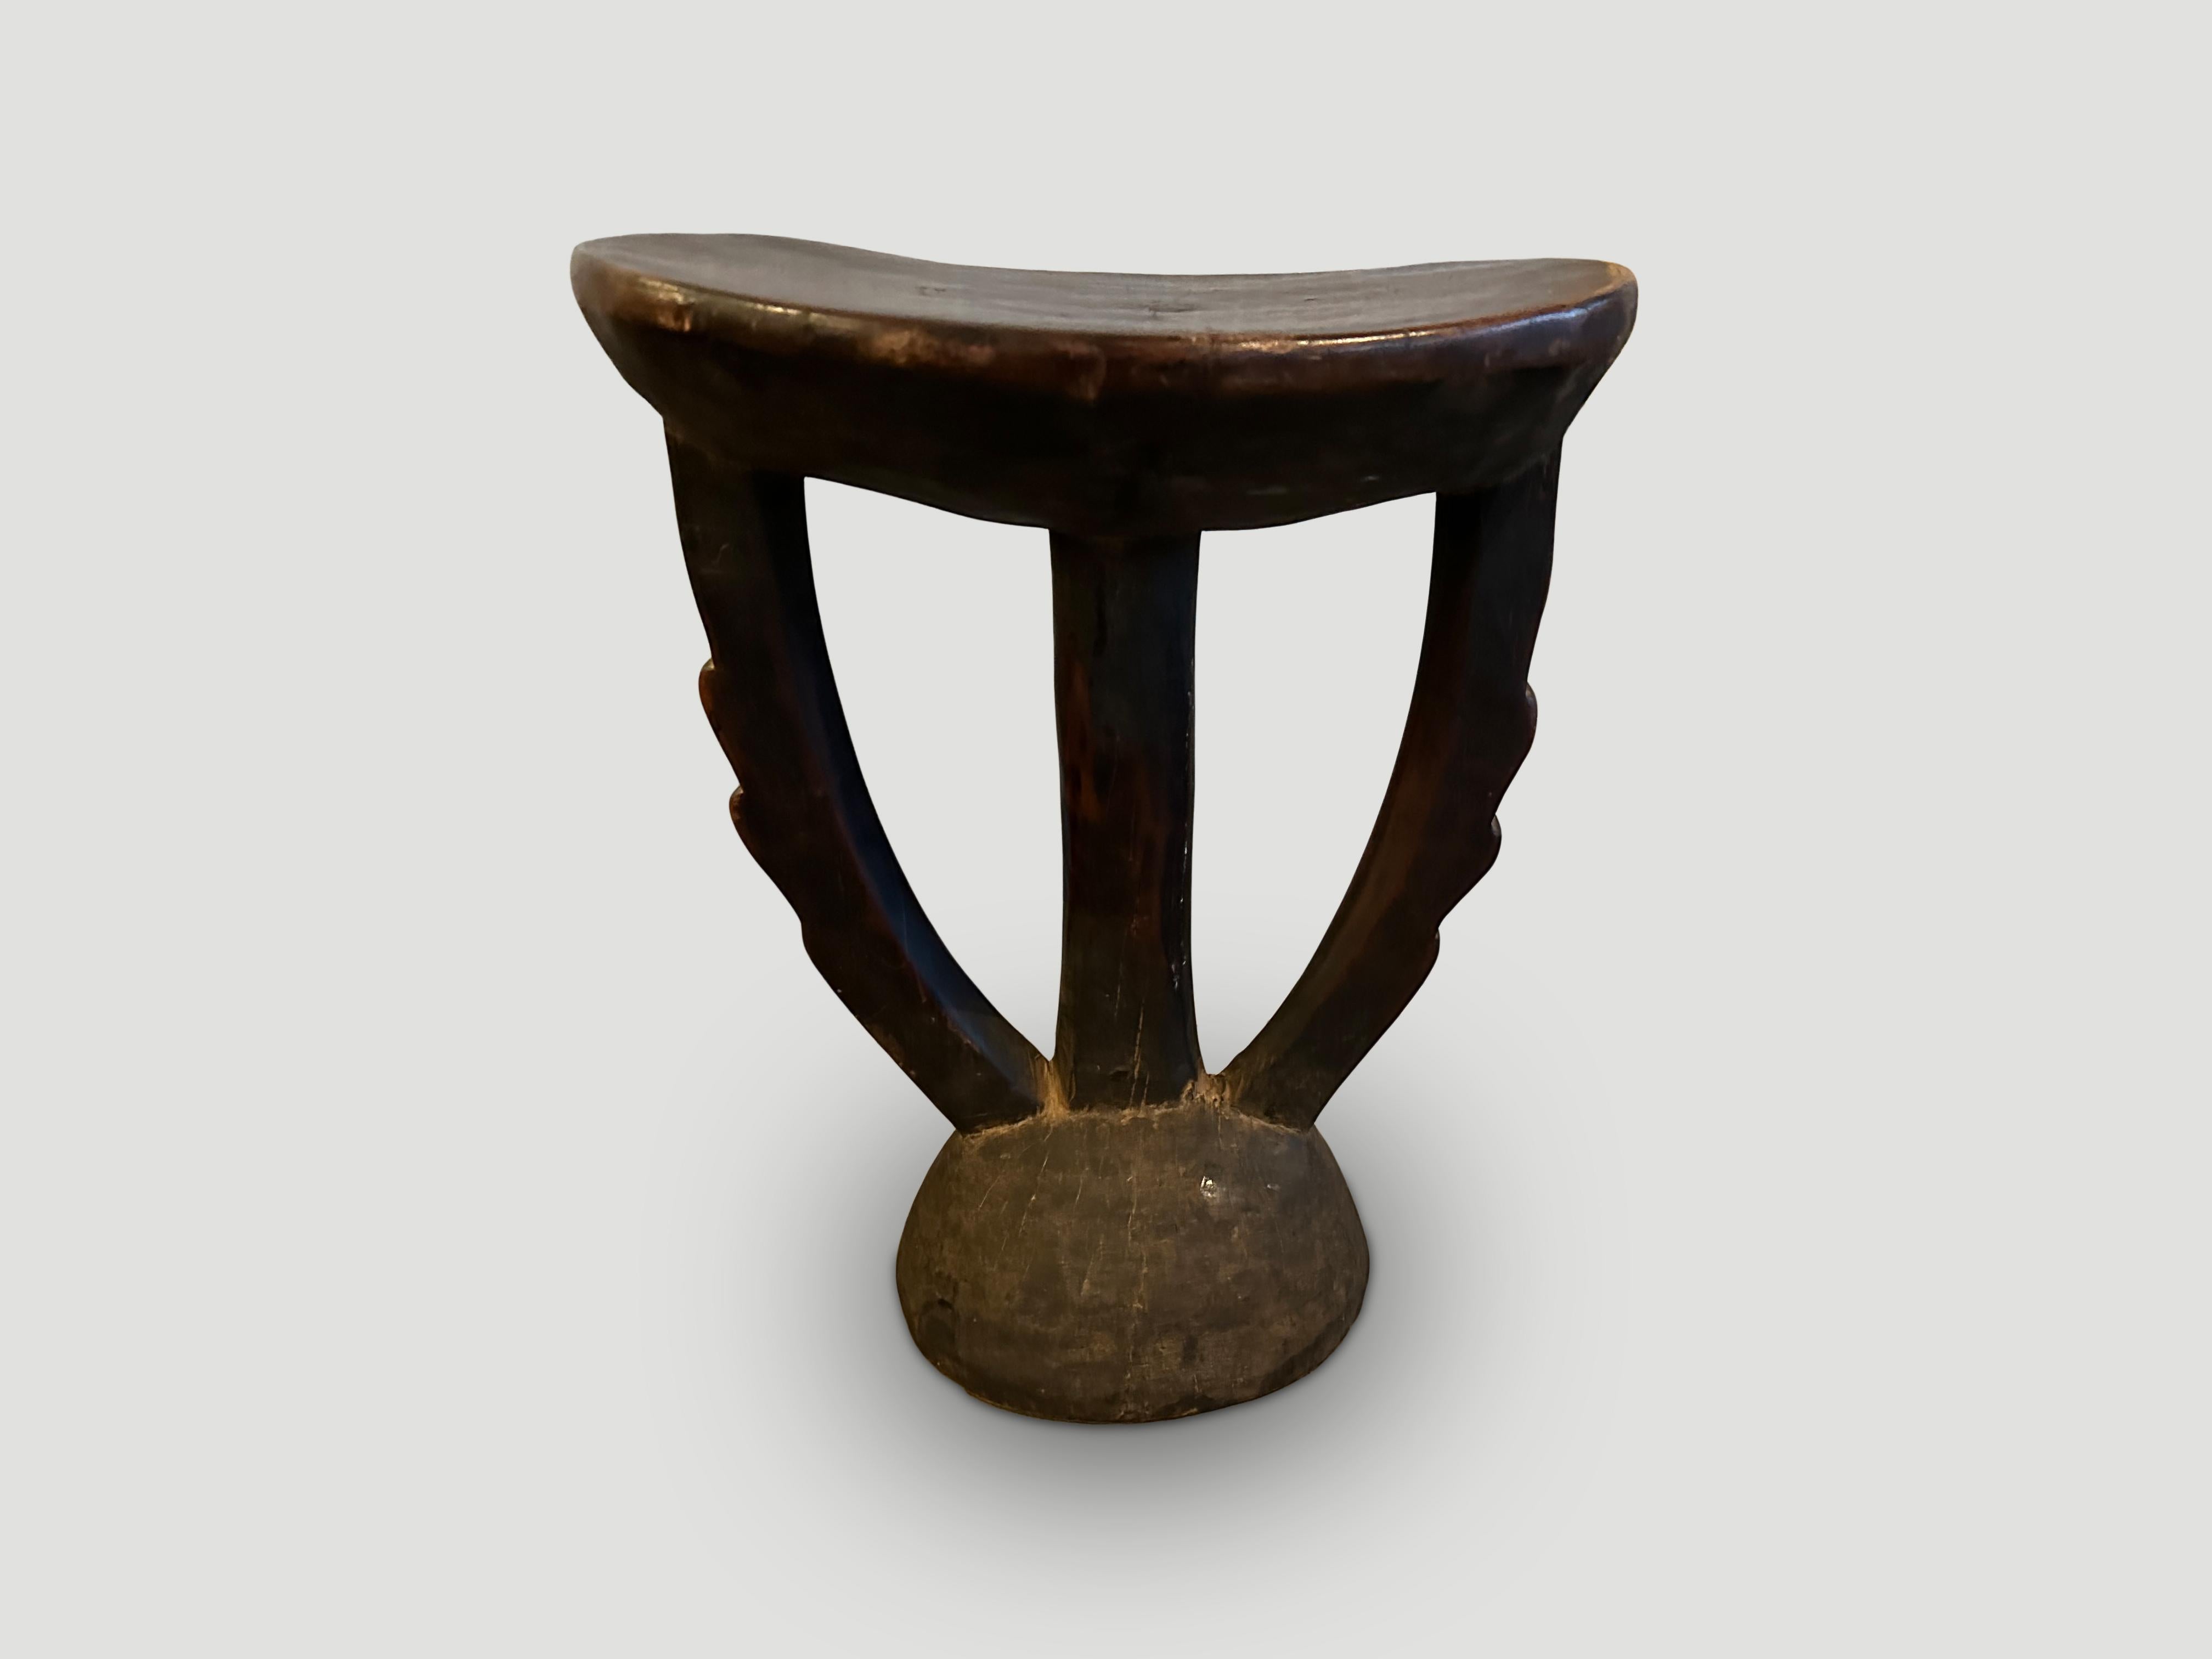 Tribal Andrianna Shamaris Rare Antique Teak Wood African Sculptural Side Table